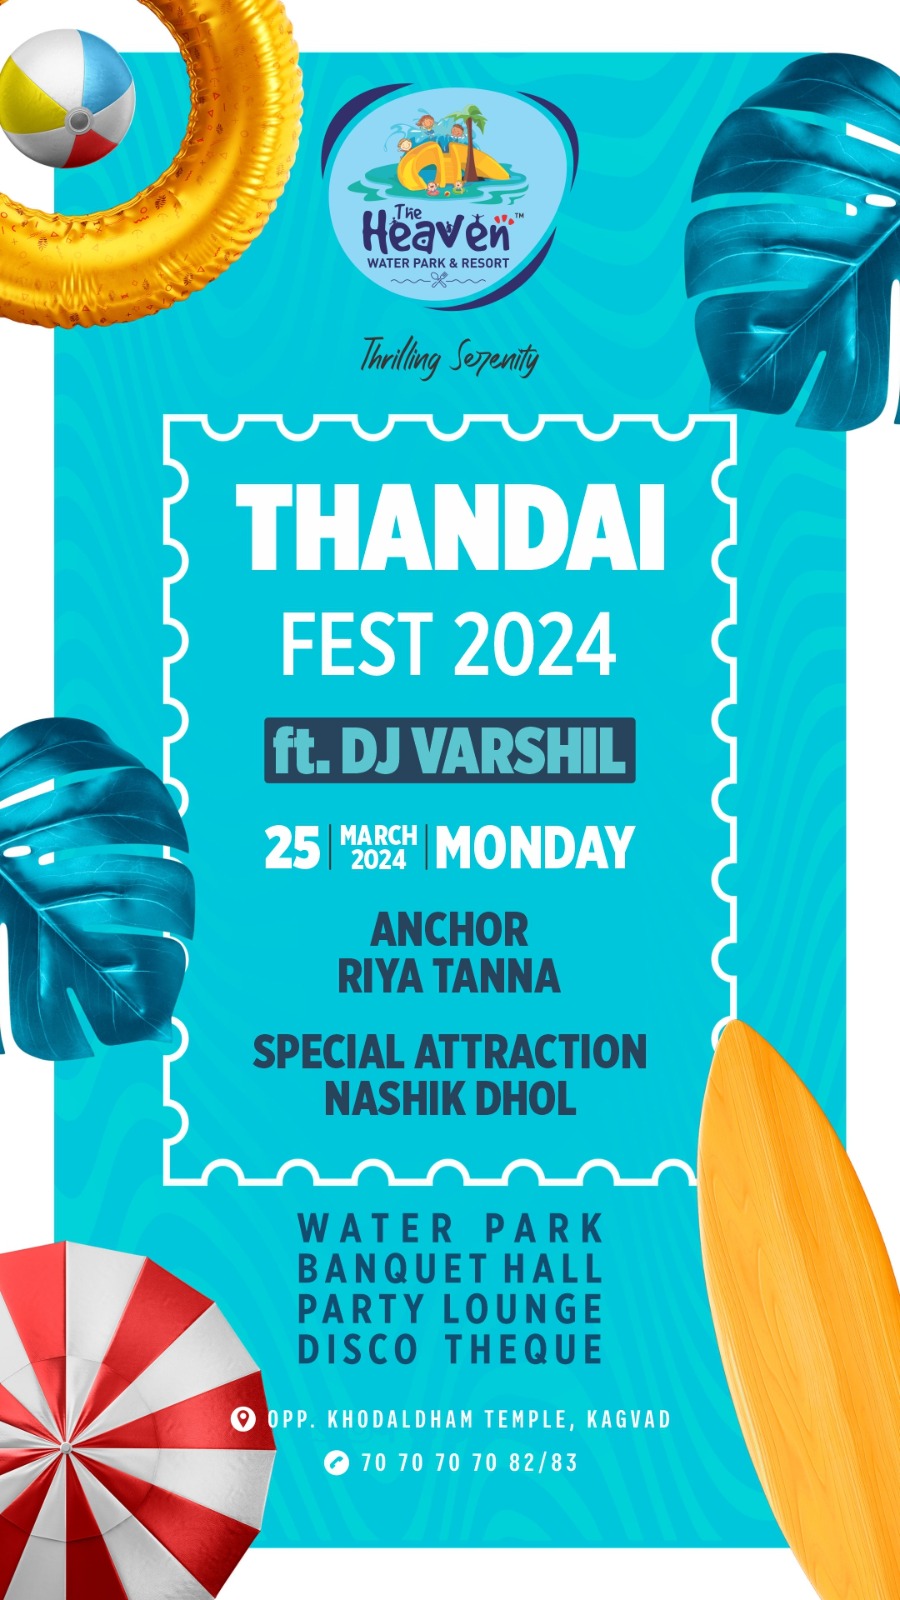 THANDAI FEST 2024